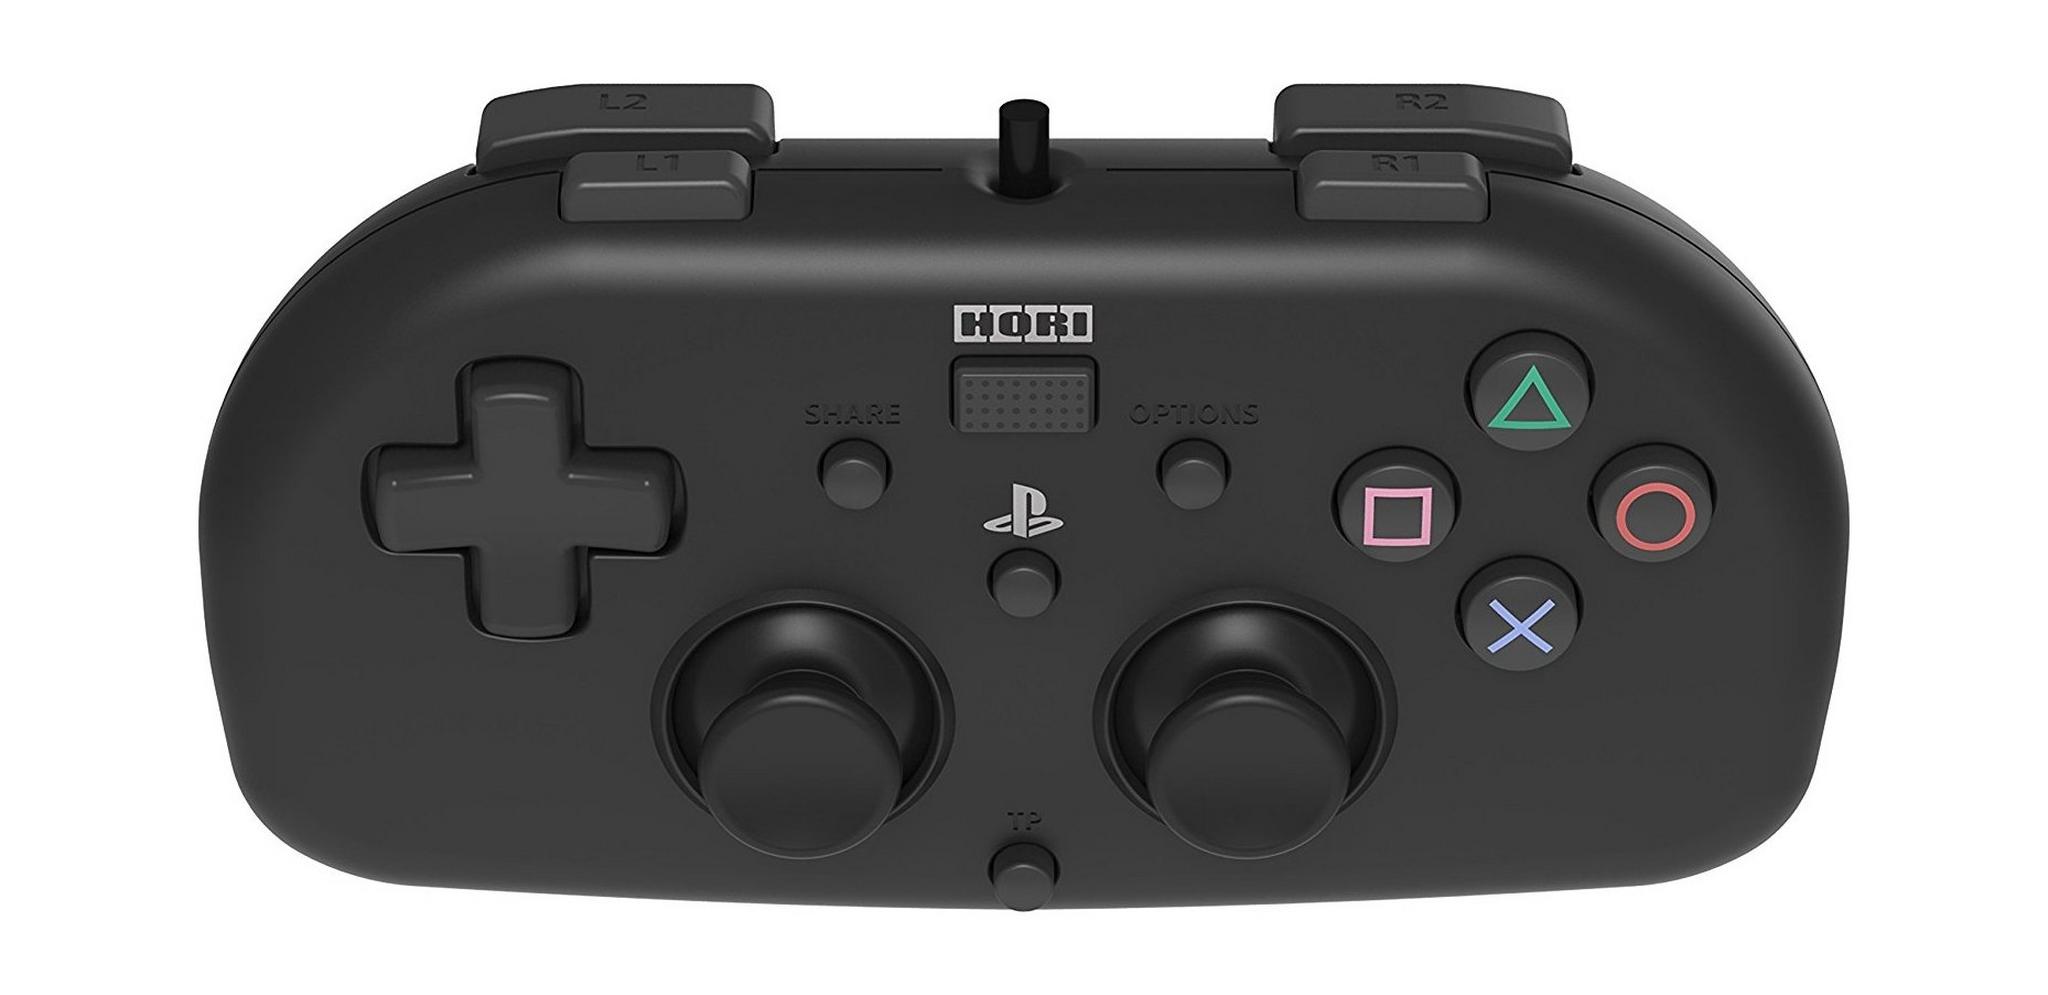 HORIPAD Wired MINI Gamepad PlayStation 4 Controller - Black